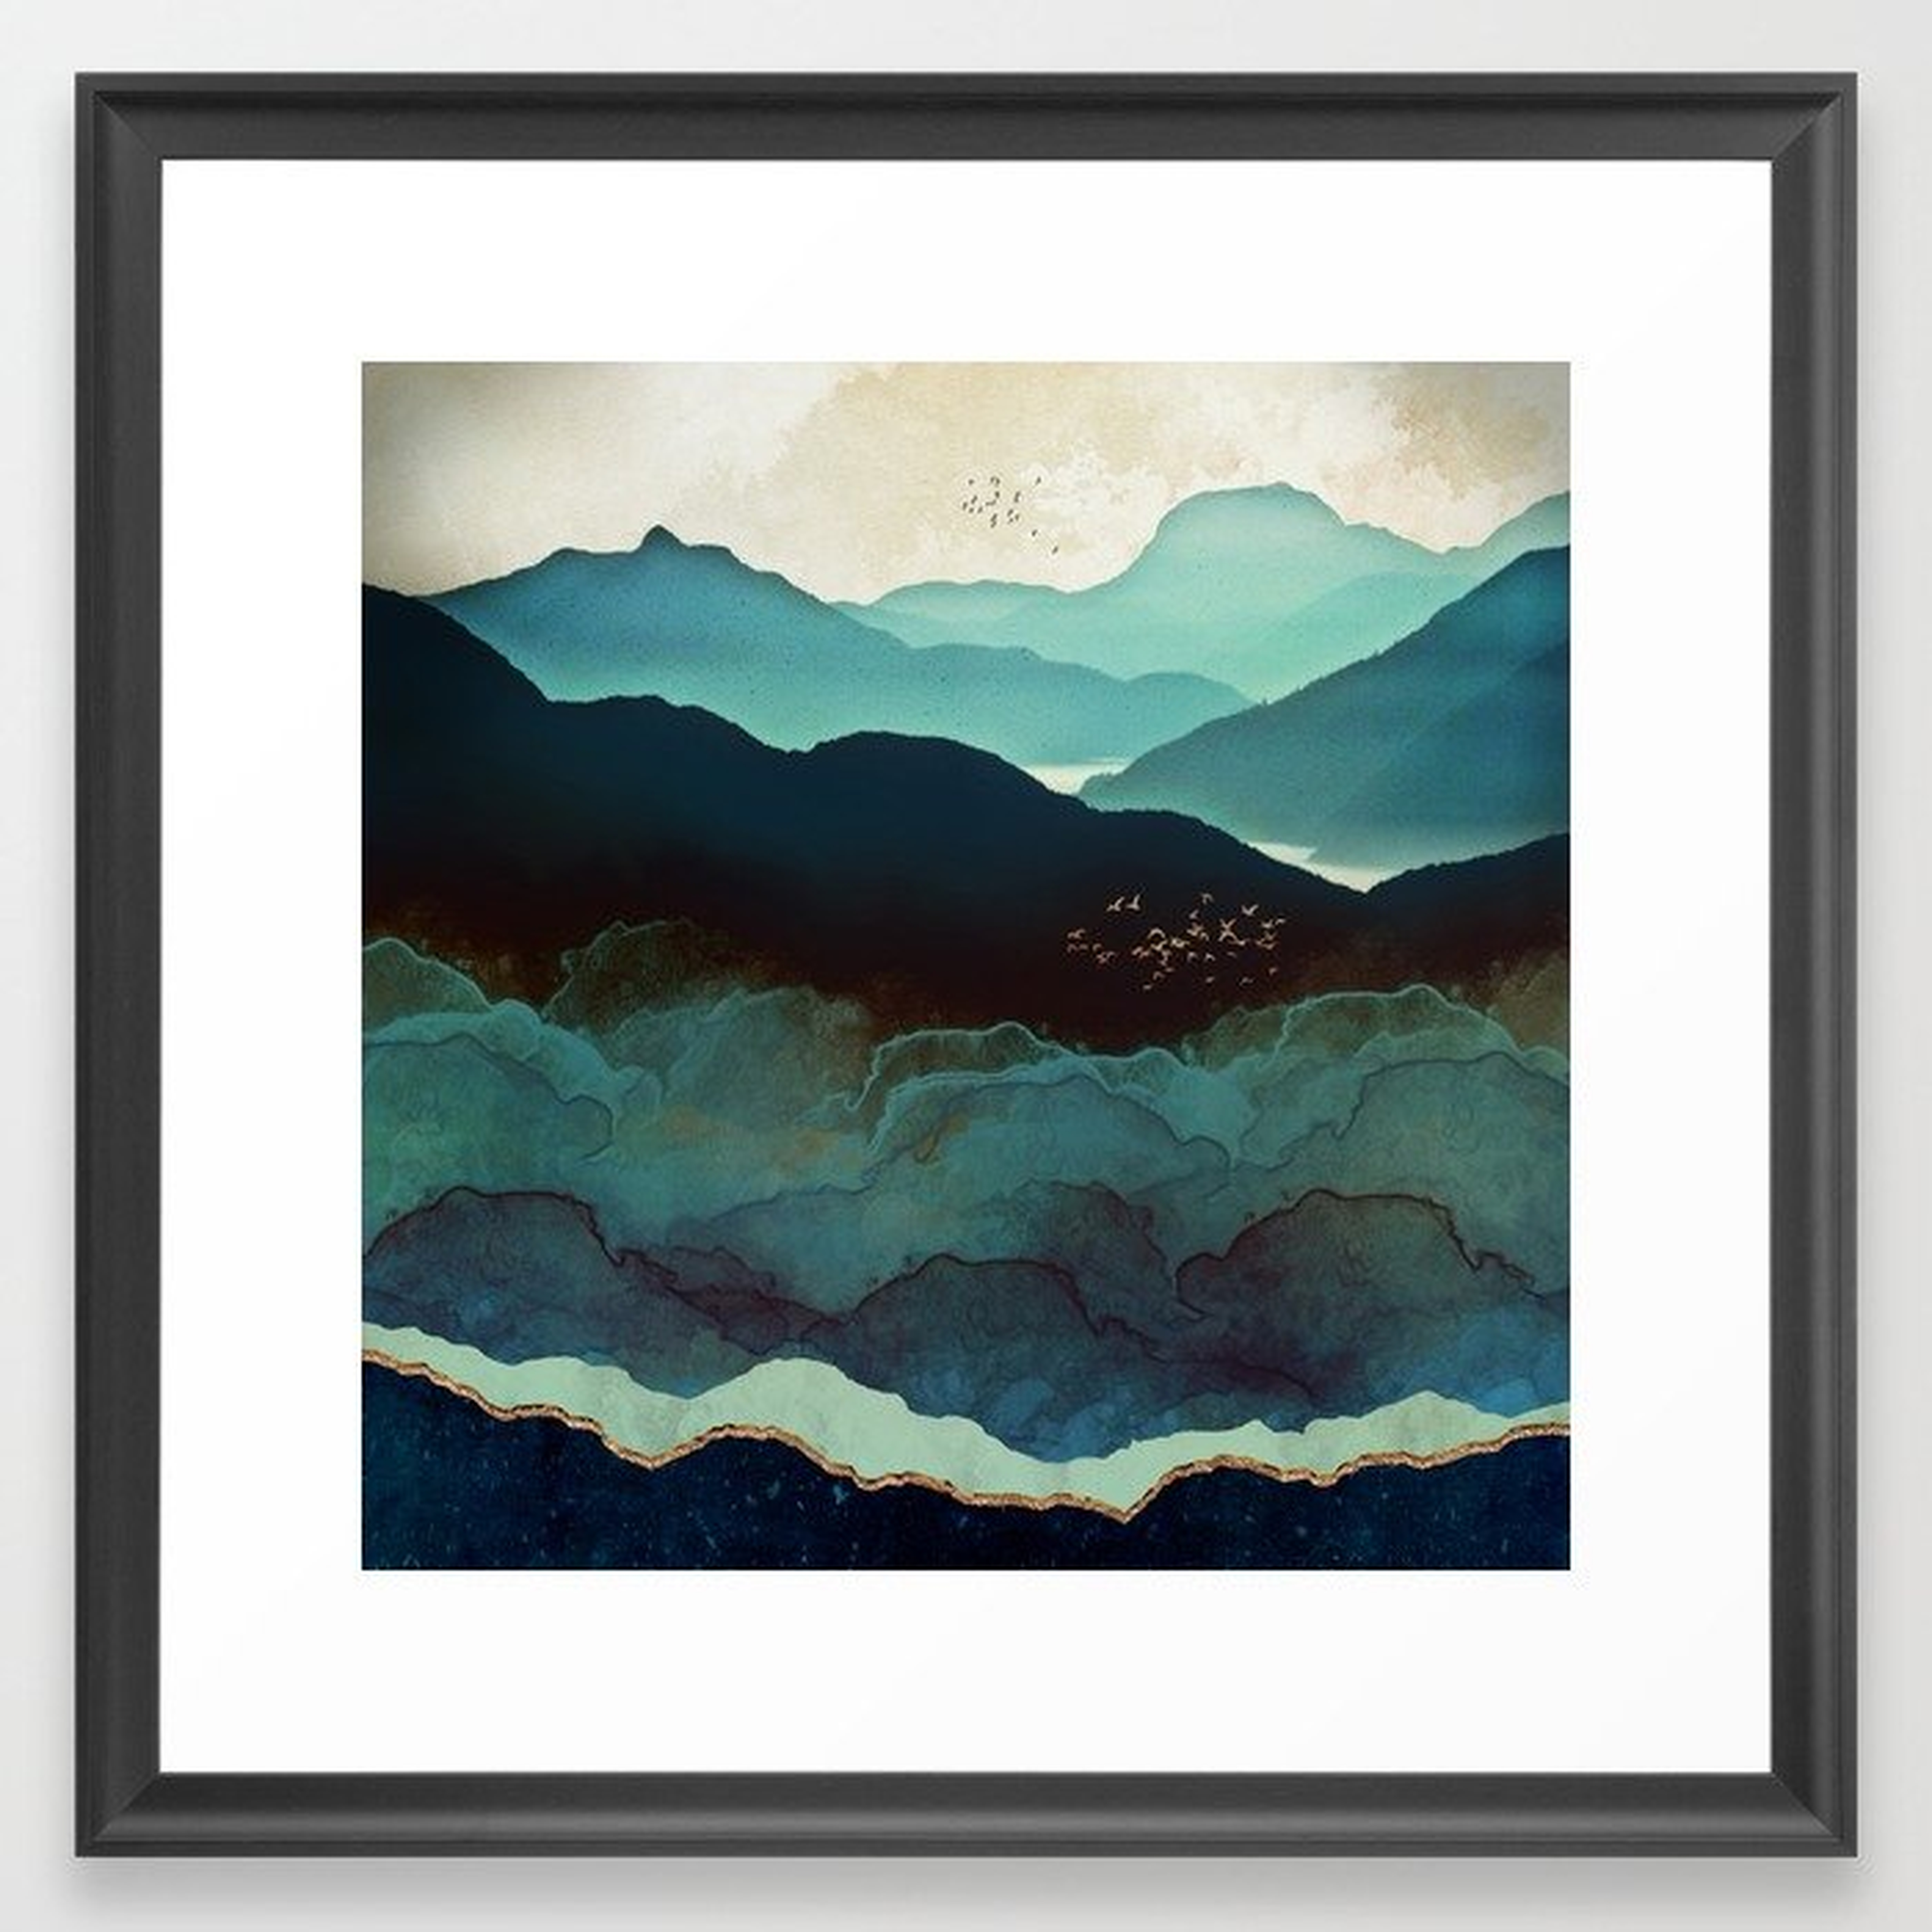 Indigo Mountains Framed Art Print 22x22 - Society6